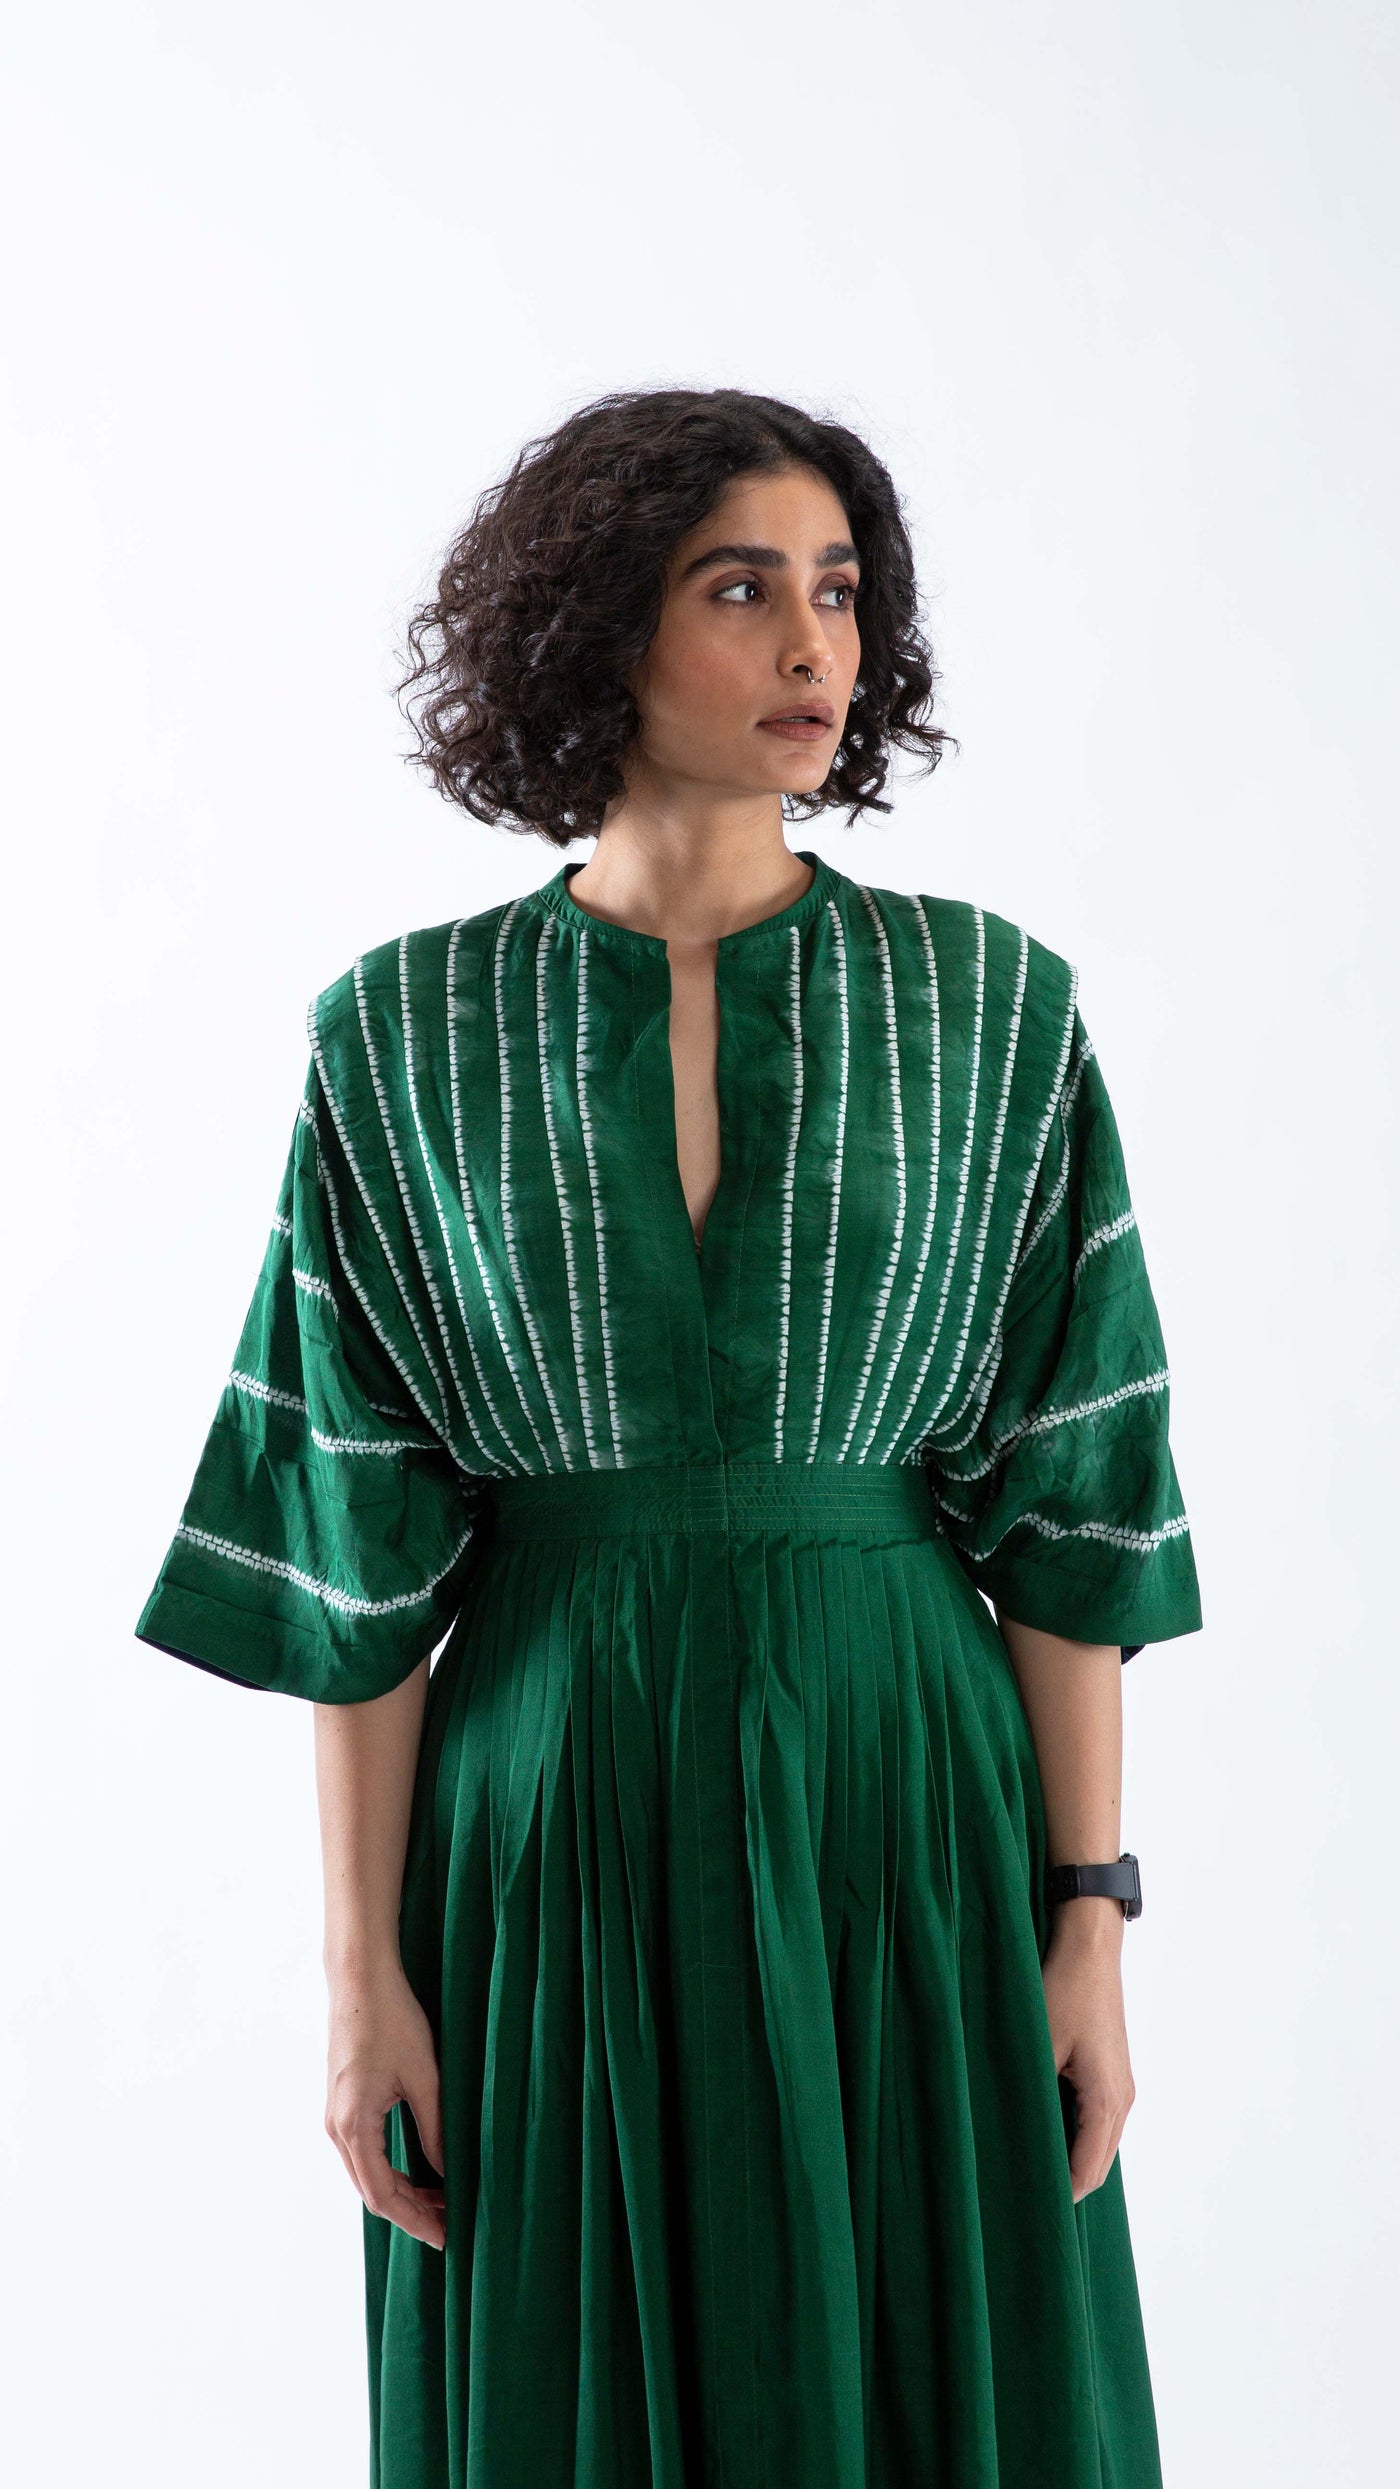 WING DRESS - BOTTLE GREEN Fashion Medium